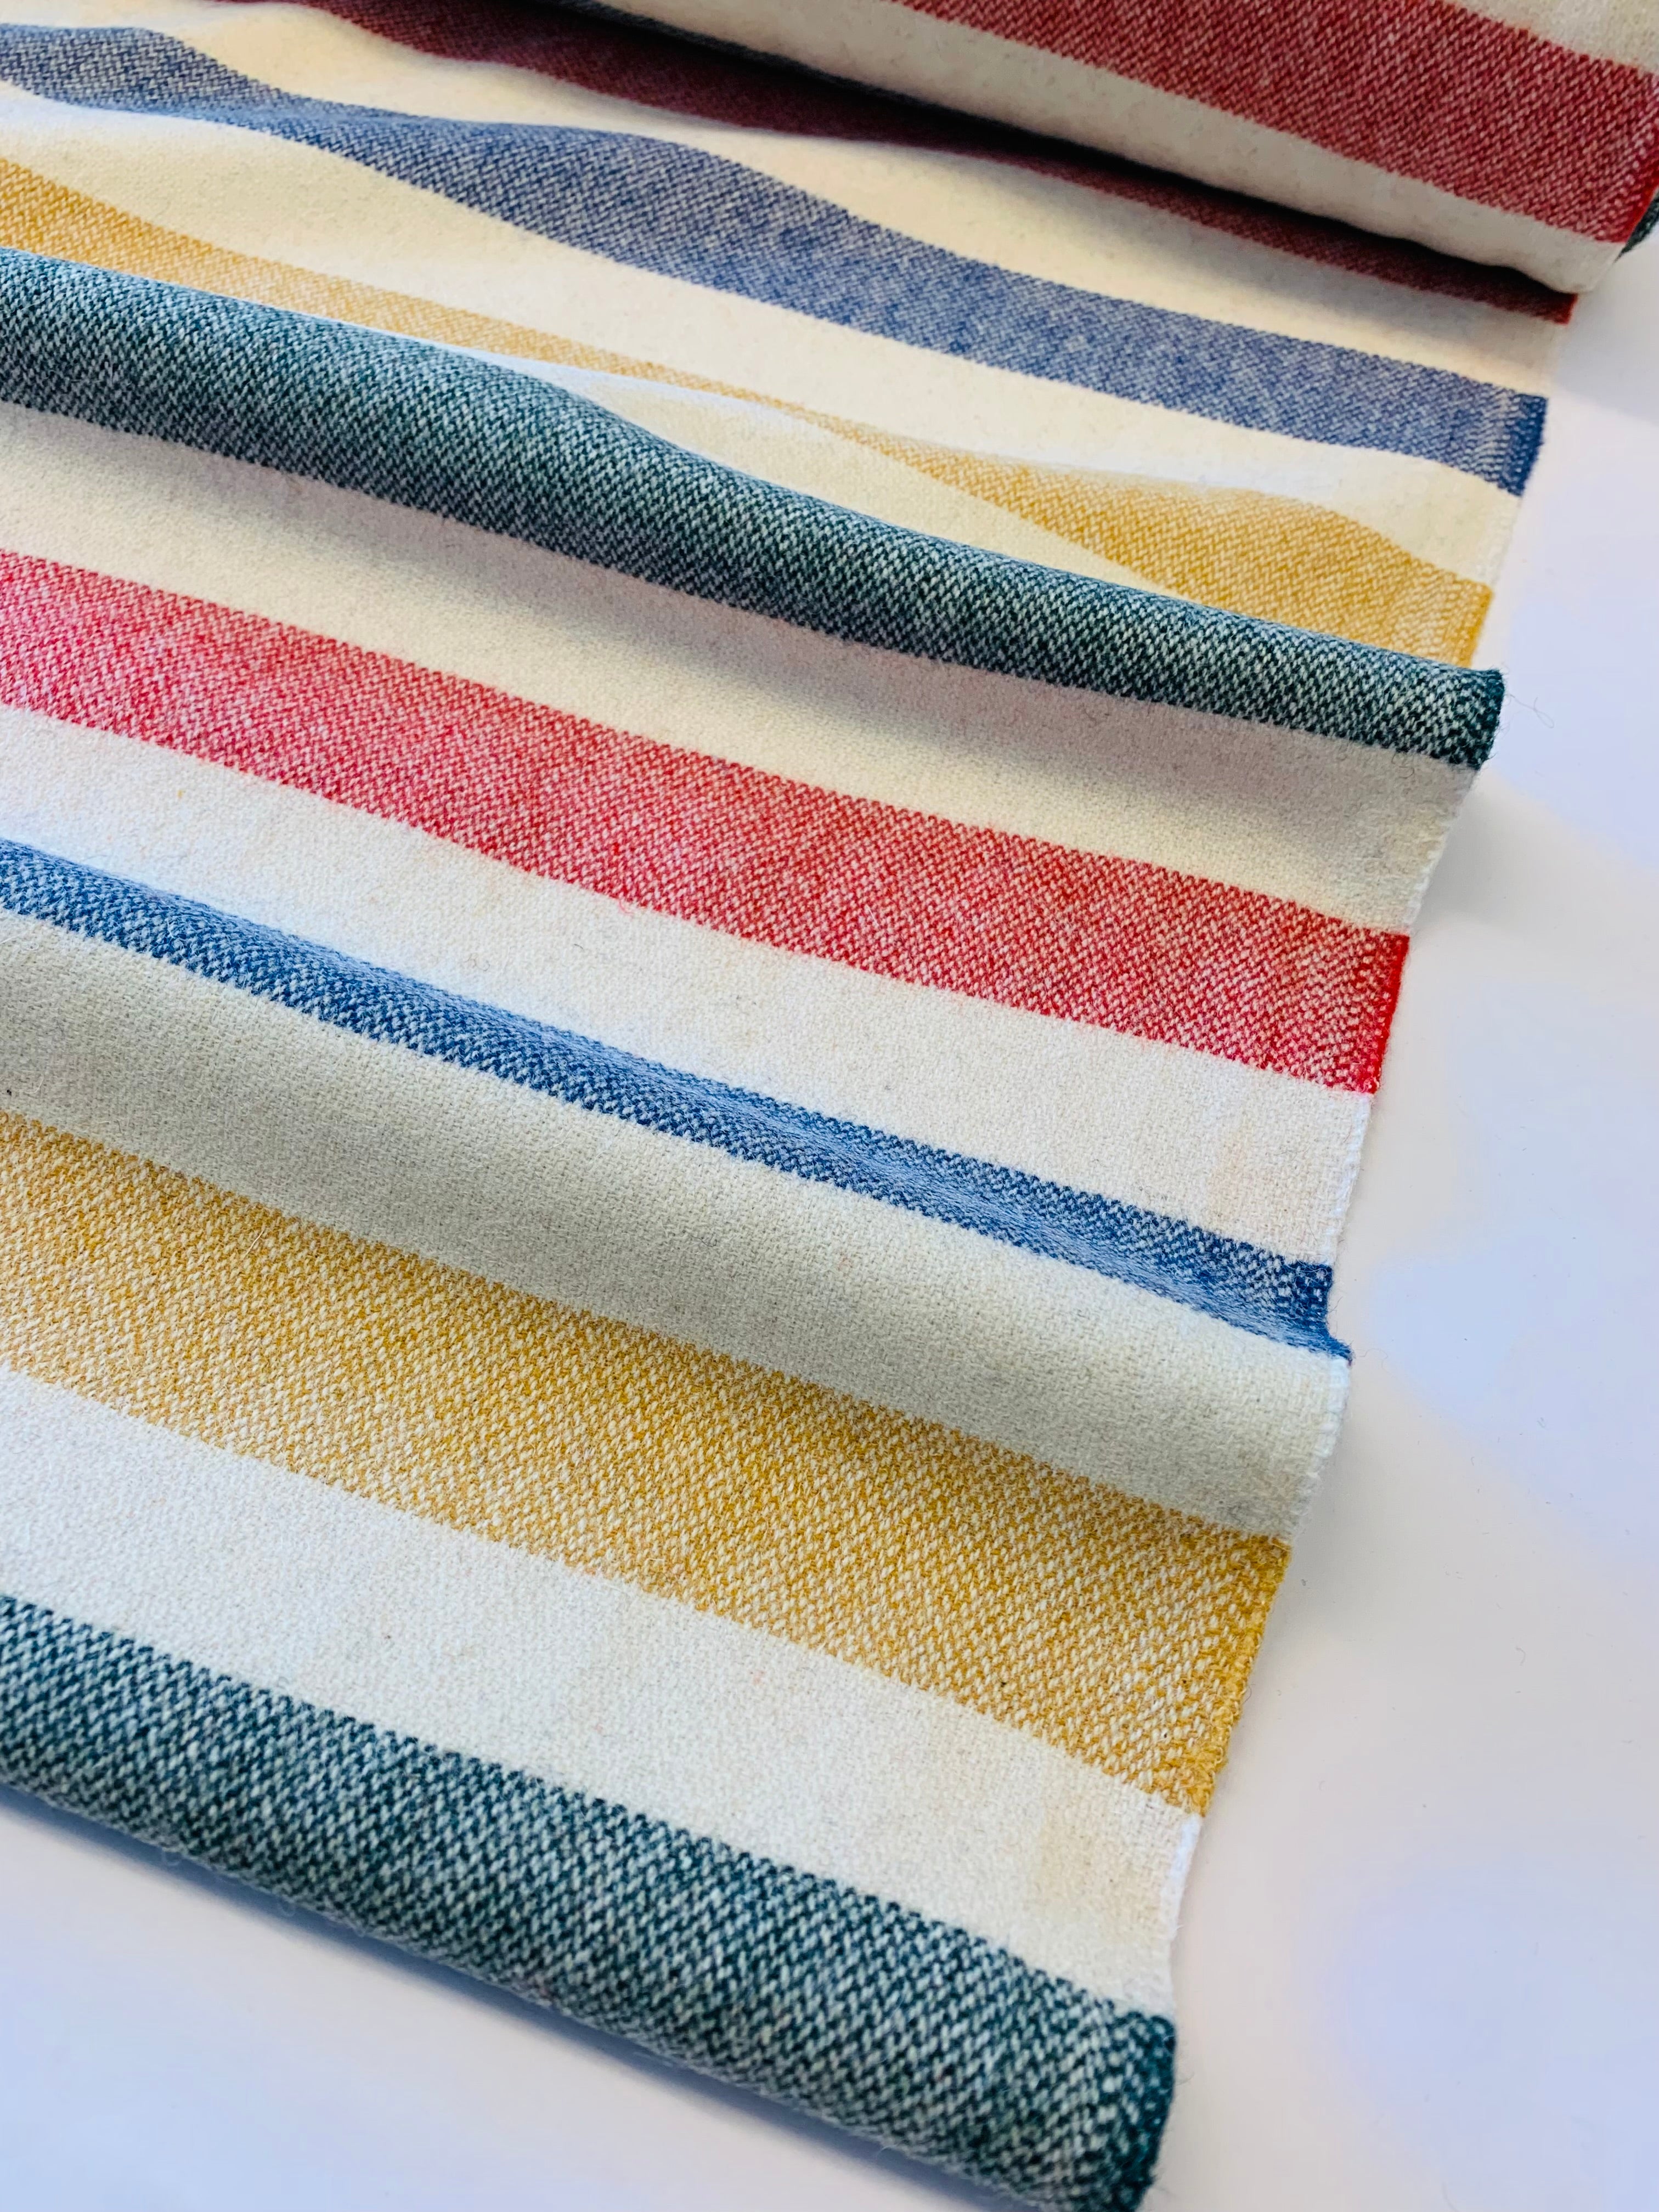 CHELSEA Stripe wool coating fabric